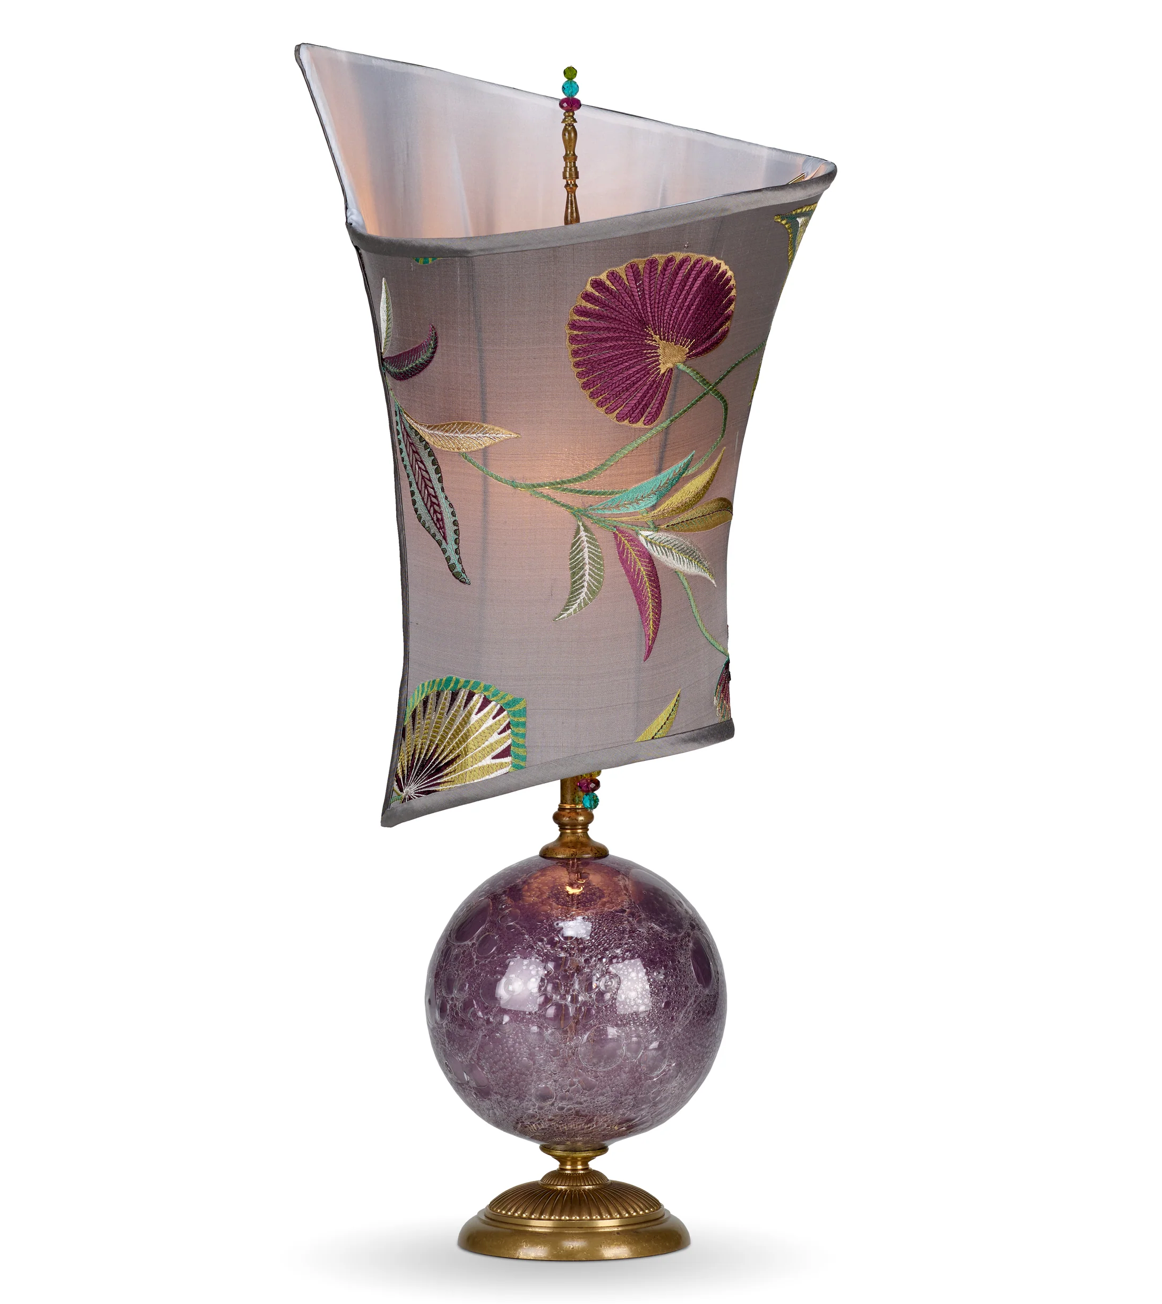 Kinzig Design "Michelle" table lamp